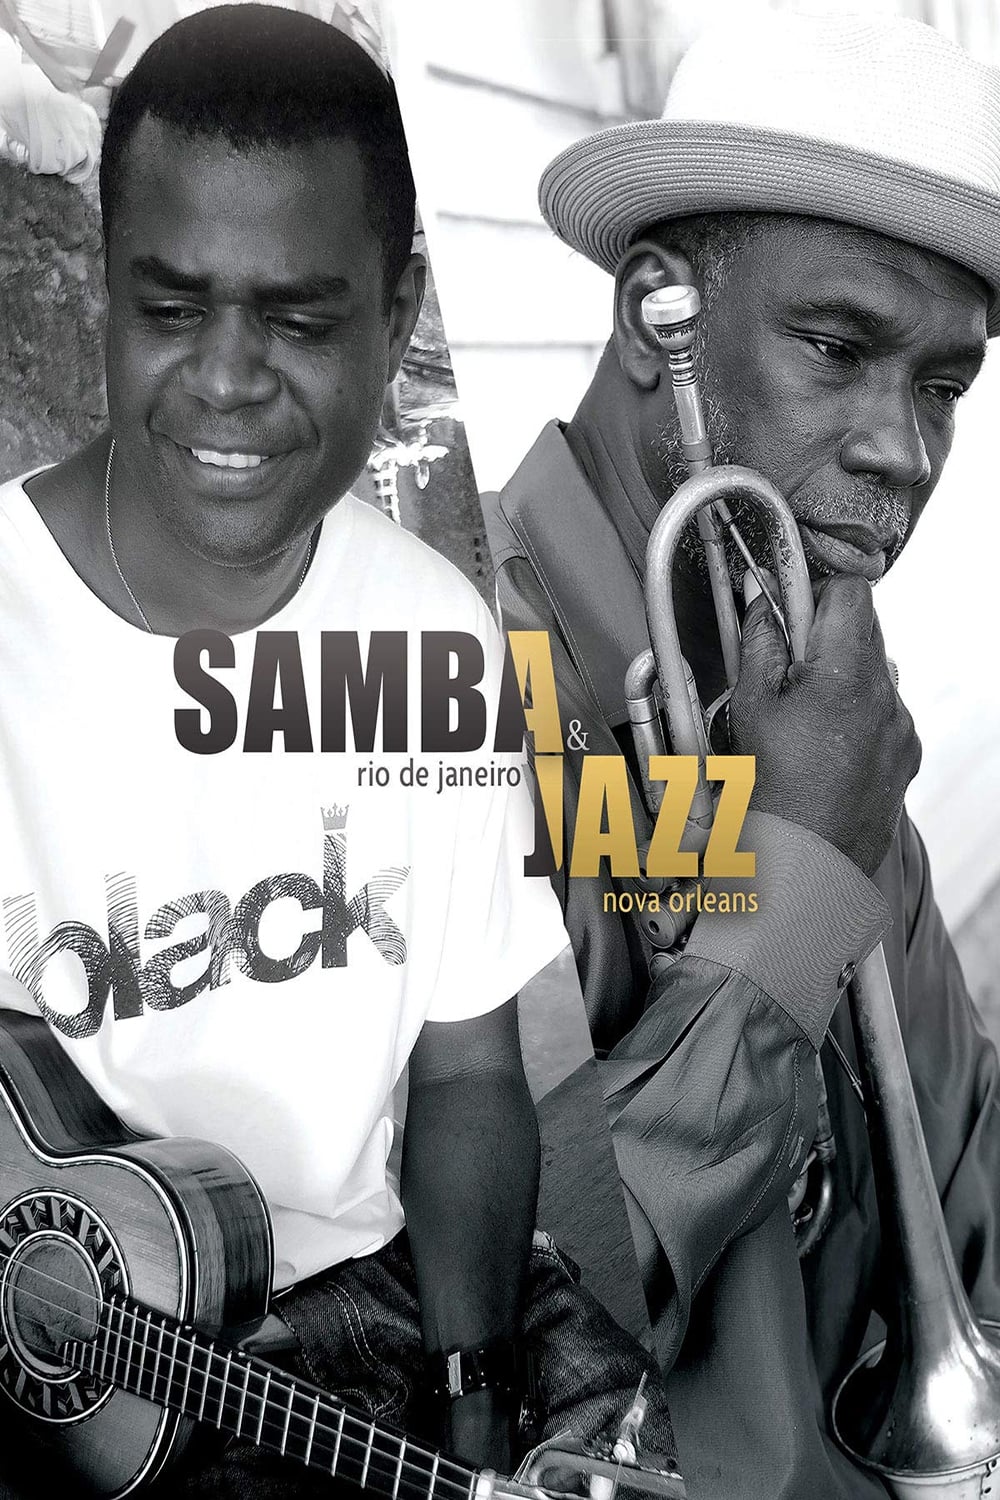 Samba & Jazz